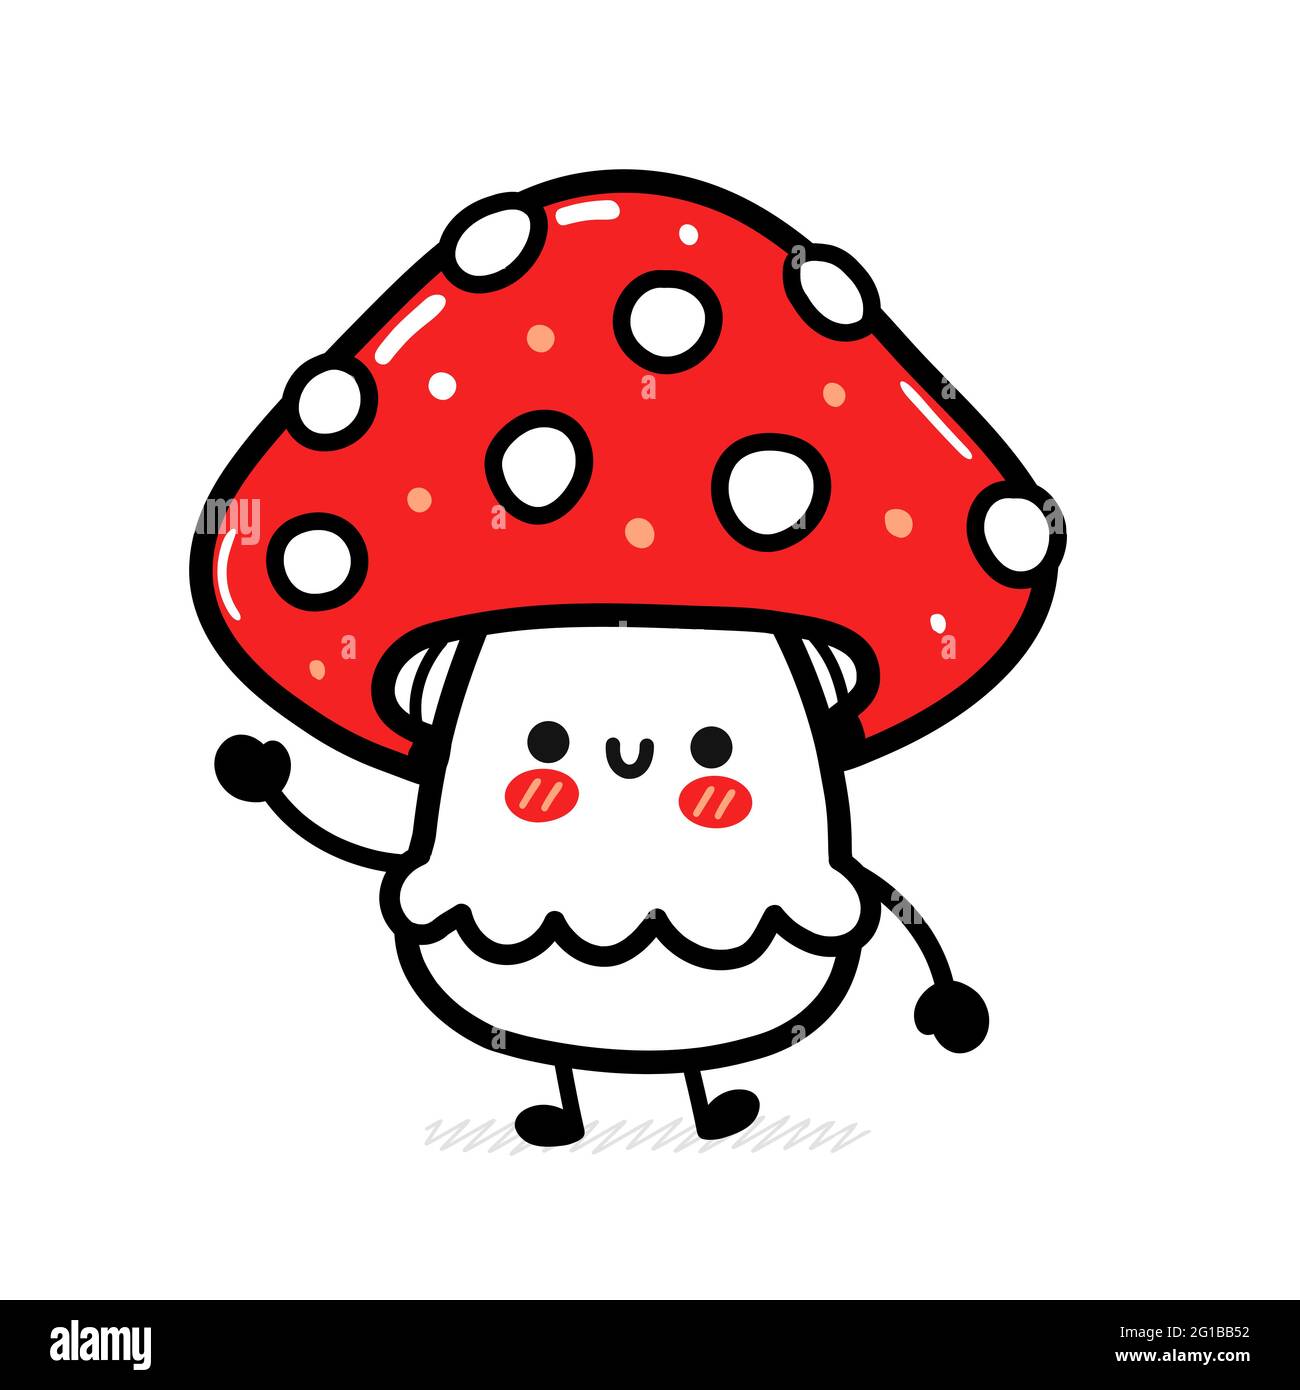 Cute funny happy amanita mushroom. Vector hand drawn cartoon kawaii character illustration icon. Isolated on white background. Funny amanita mushroom mascot character concept Stock Vector